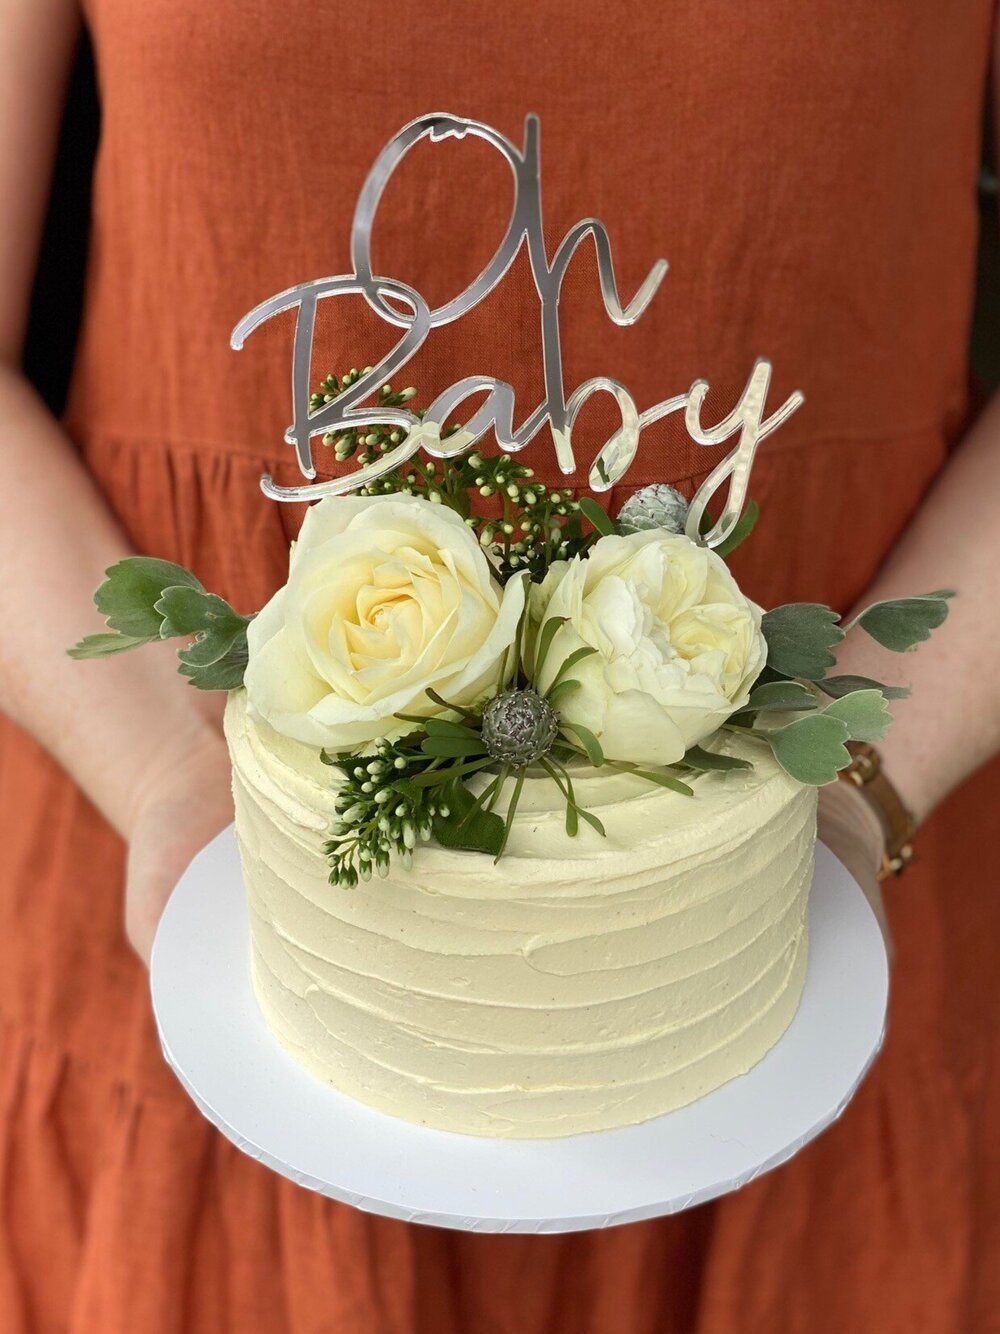 Pin on Wedding cake ideas